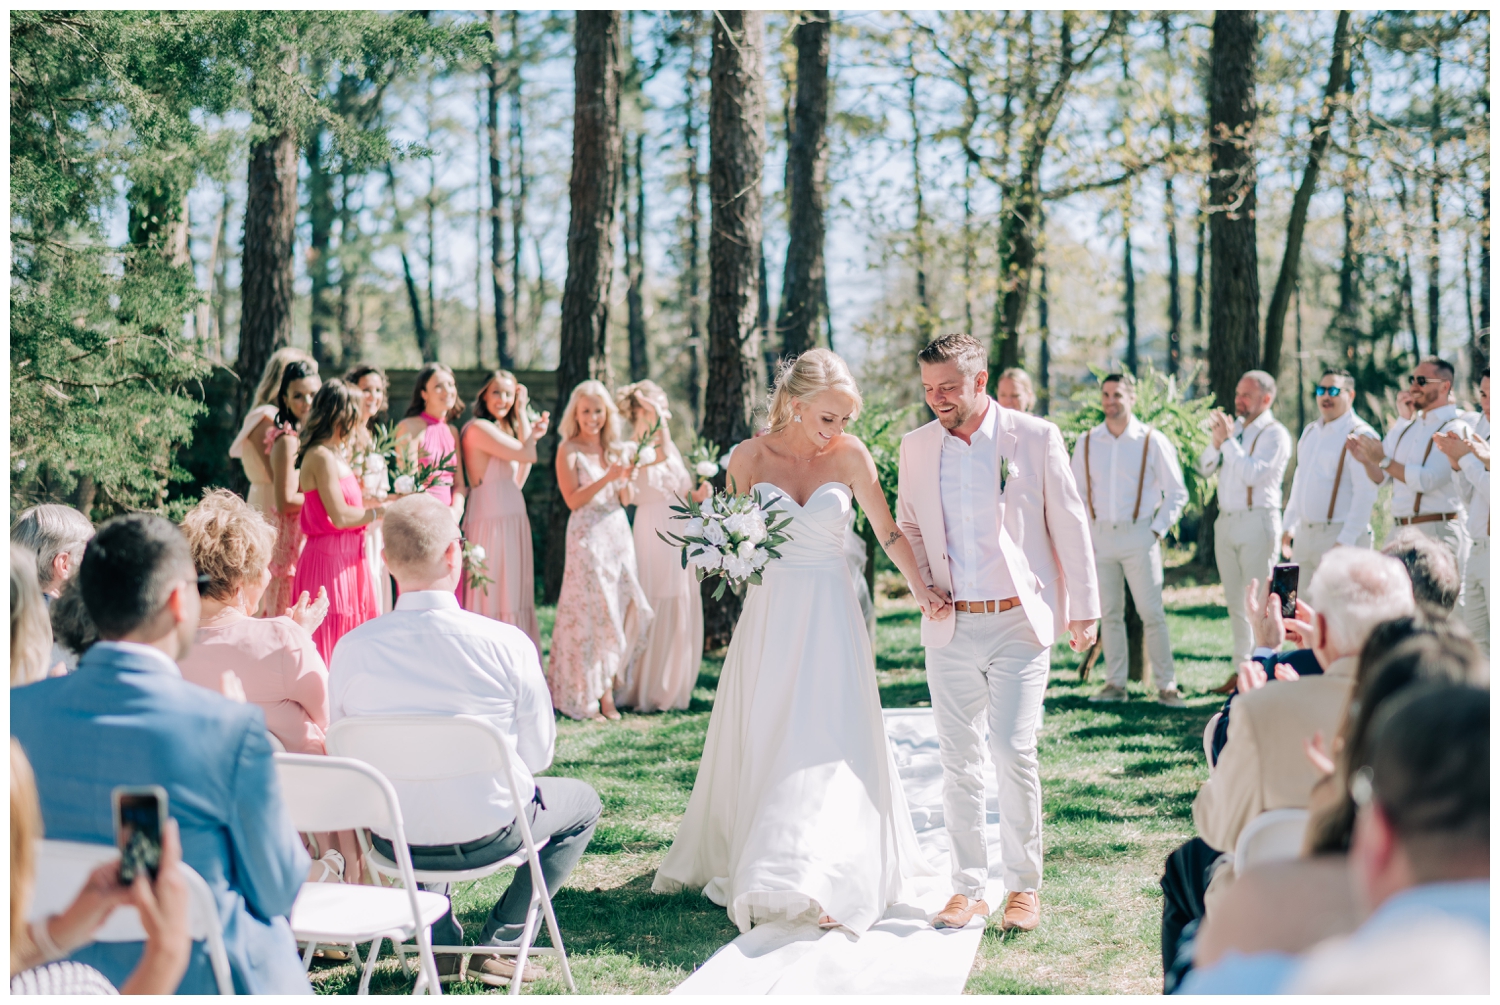 Backyard Wedding,Carats and Cake,Destination Wedding Photographer,Hannah Bryerton Photoraphy,Jersey Brides,Jersey Shore,NJ Wedding,Pink Bridesmaids,Spring Wedding,WNY Photographer,